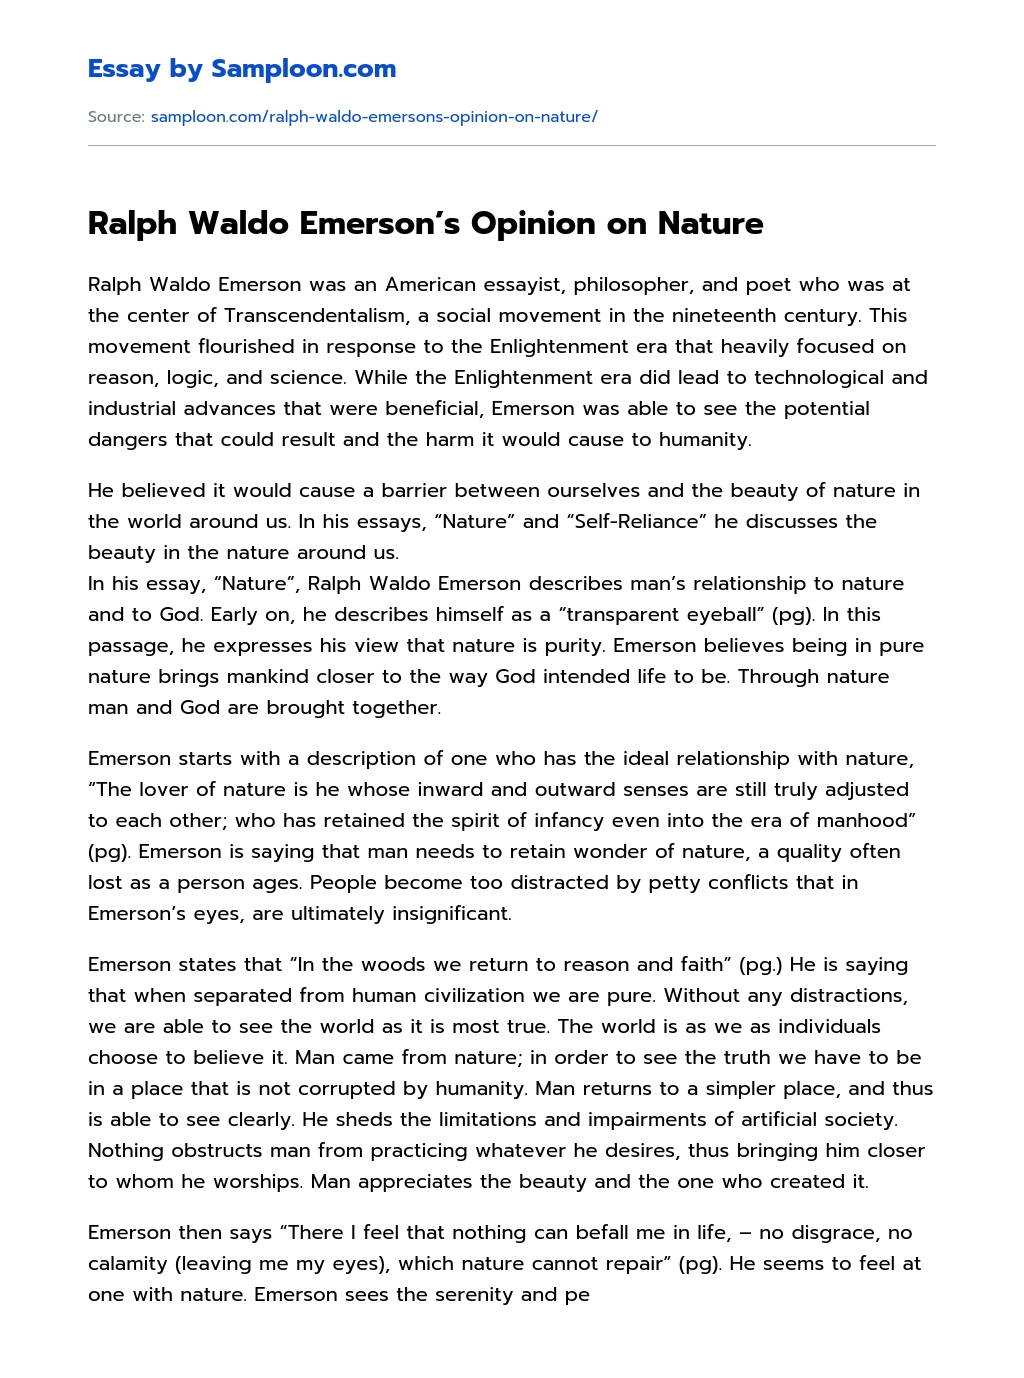 Ralph Waldo Emerson’s Opinion on Nature Rhetorical Analysis essay